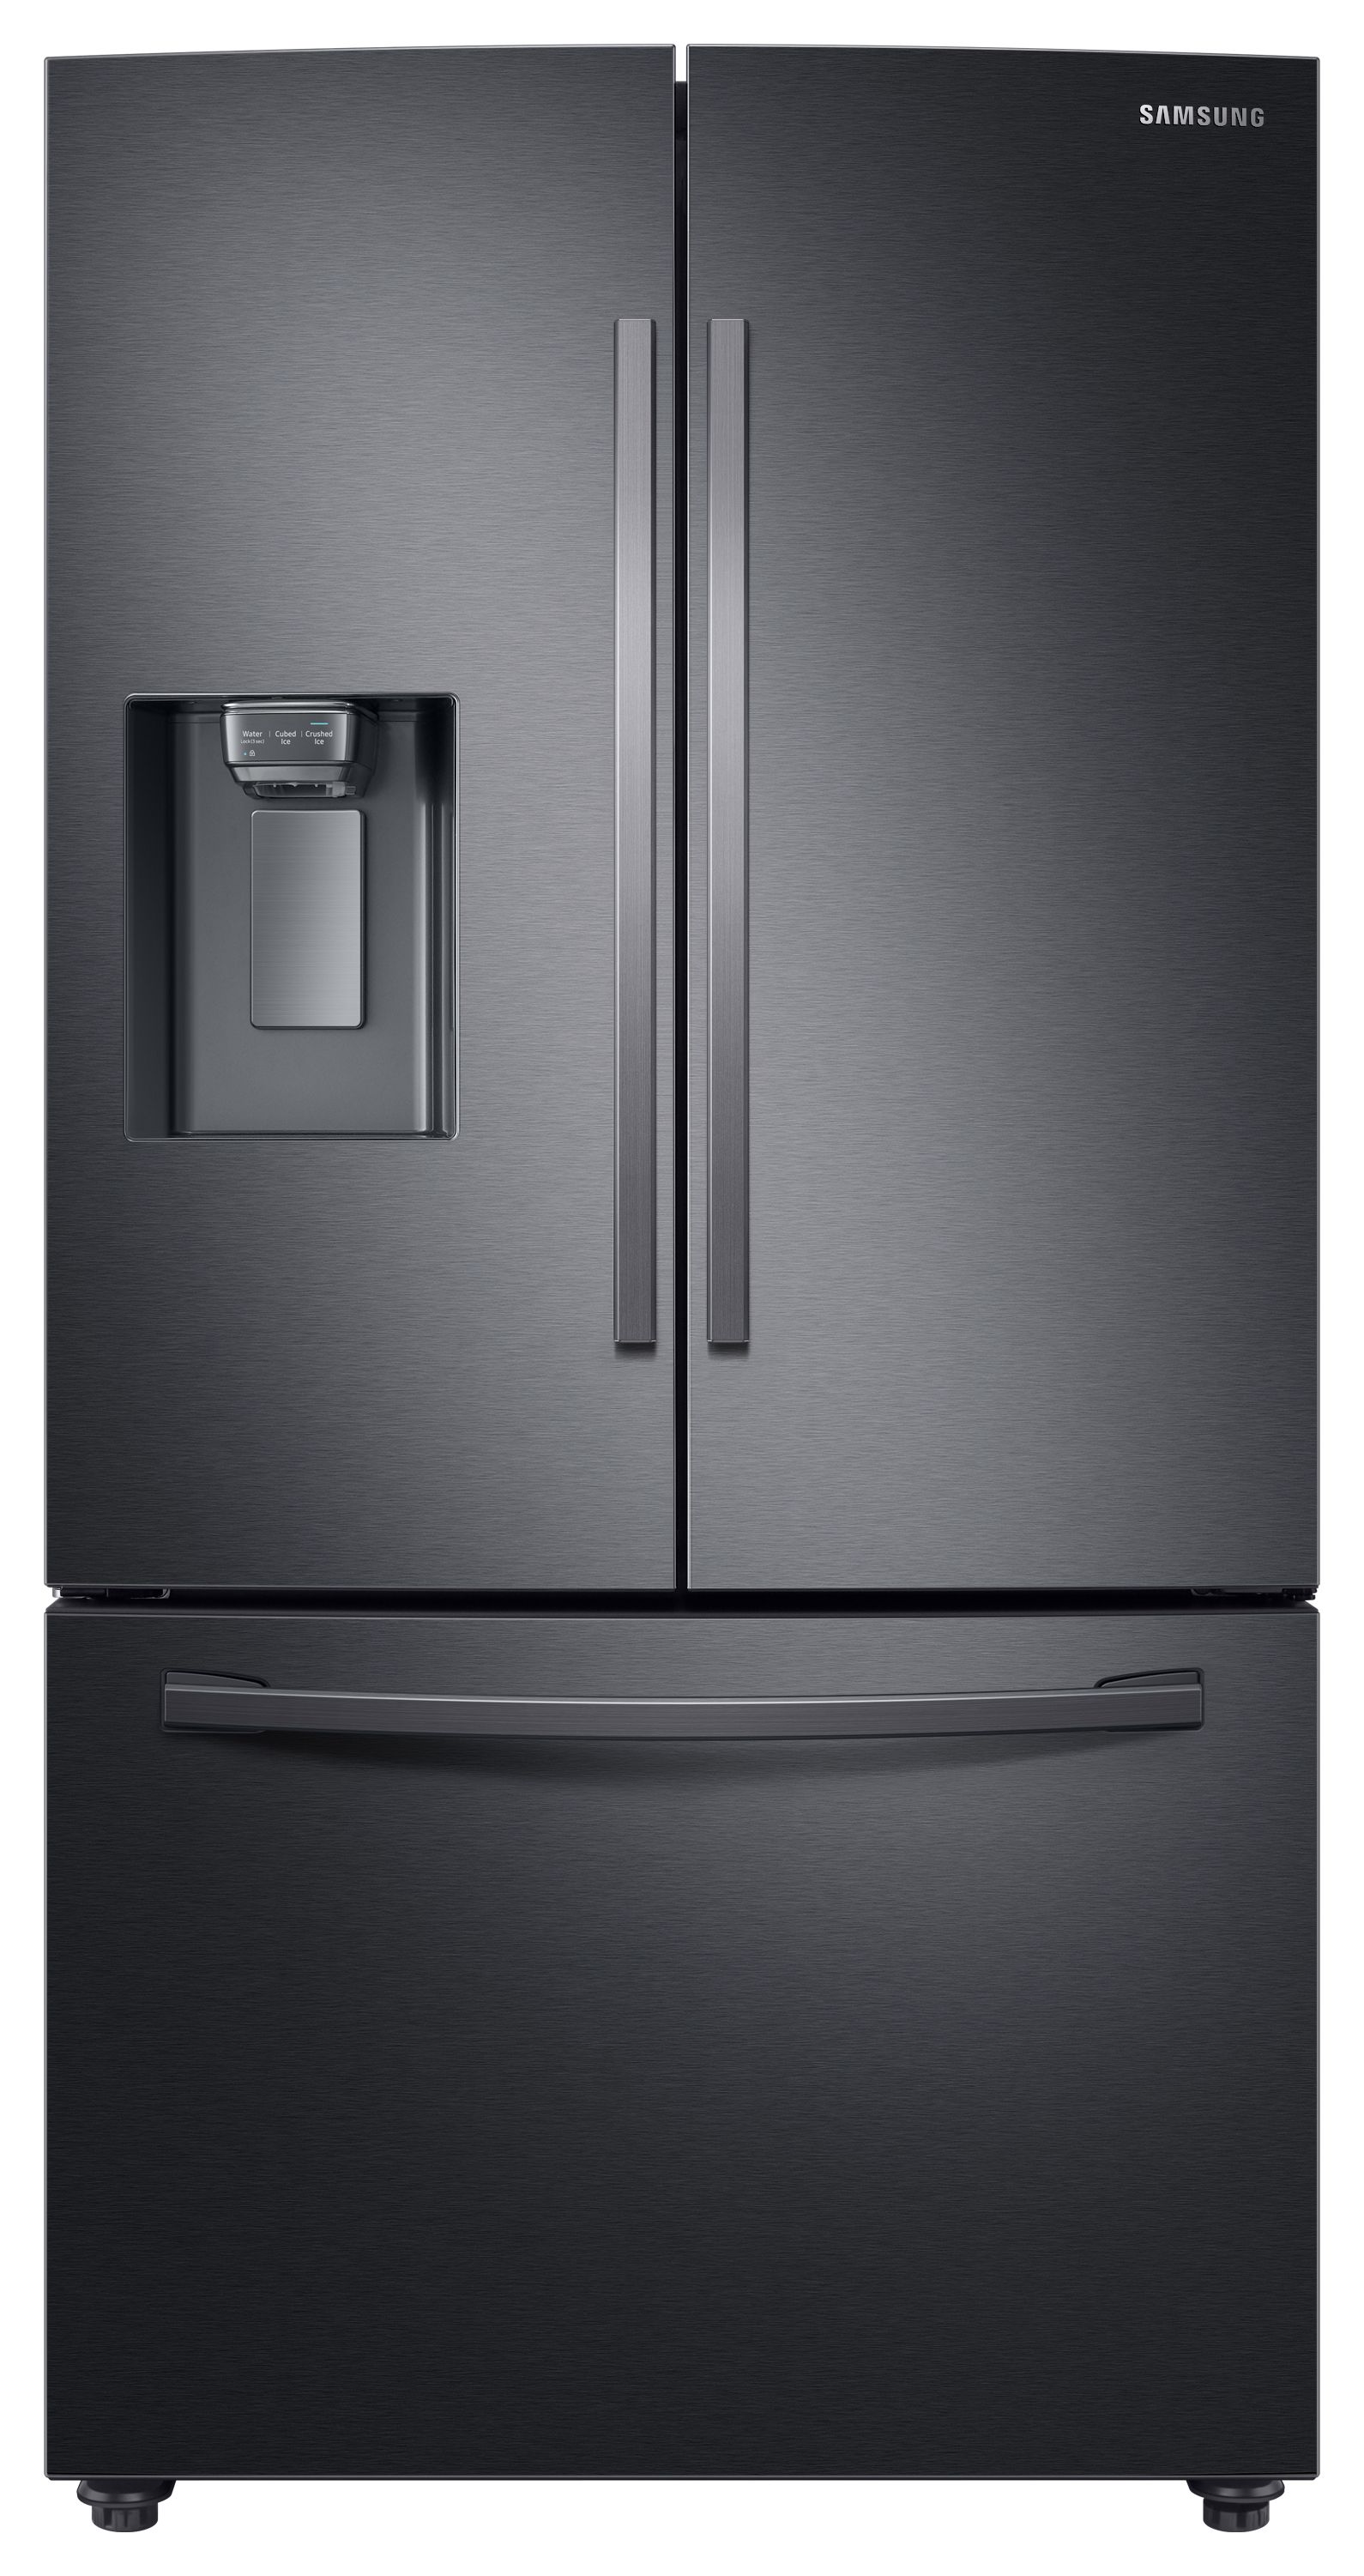 Image of Samsung RF23R62E3B1/EU Water & Ice Dispenser F-Rated Multi Door Fridge Freezer - Black Stainless